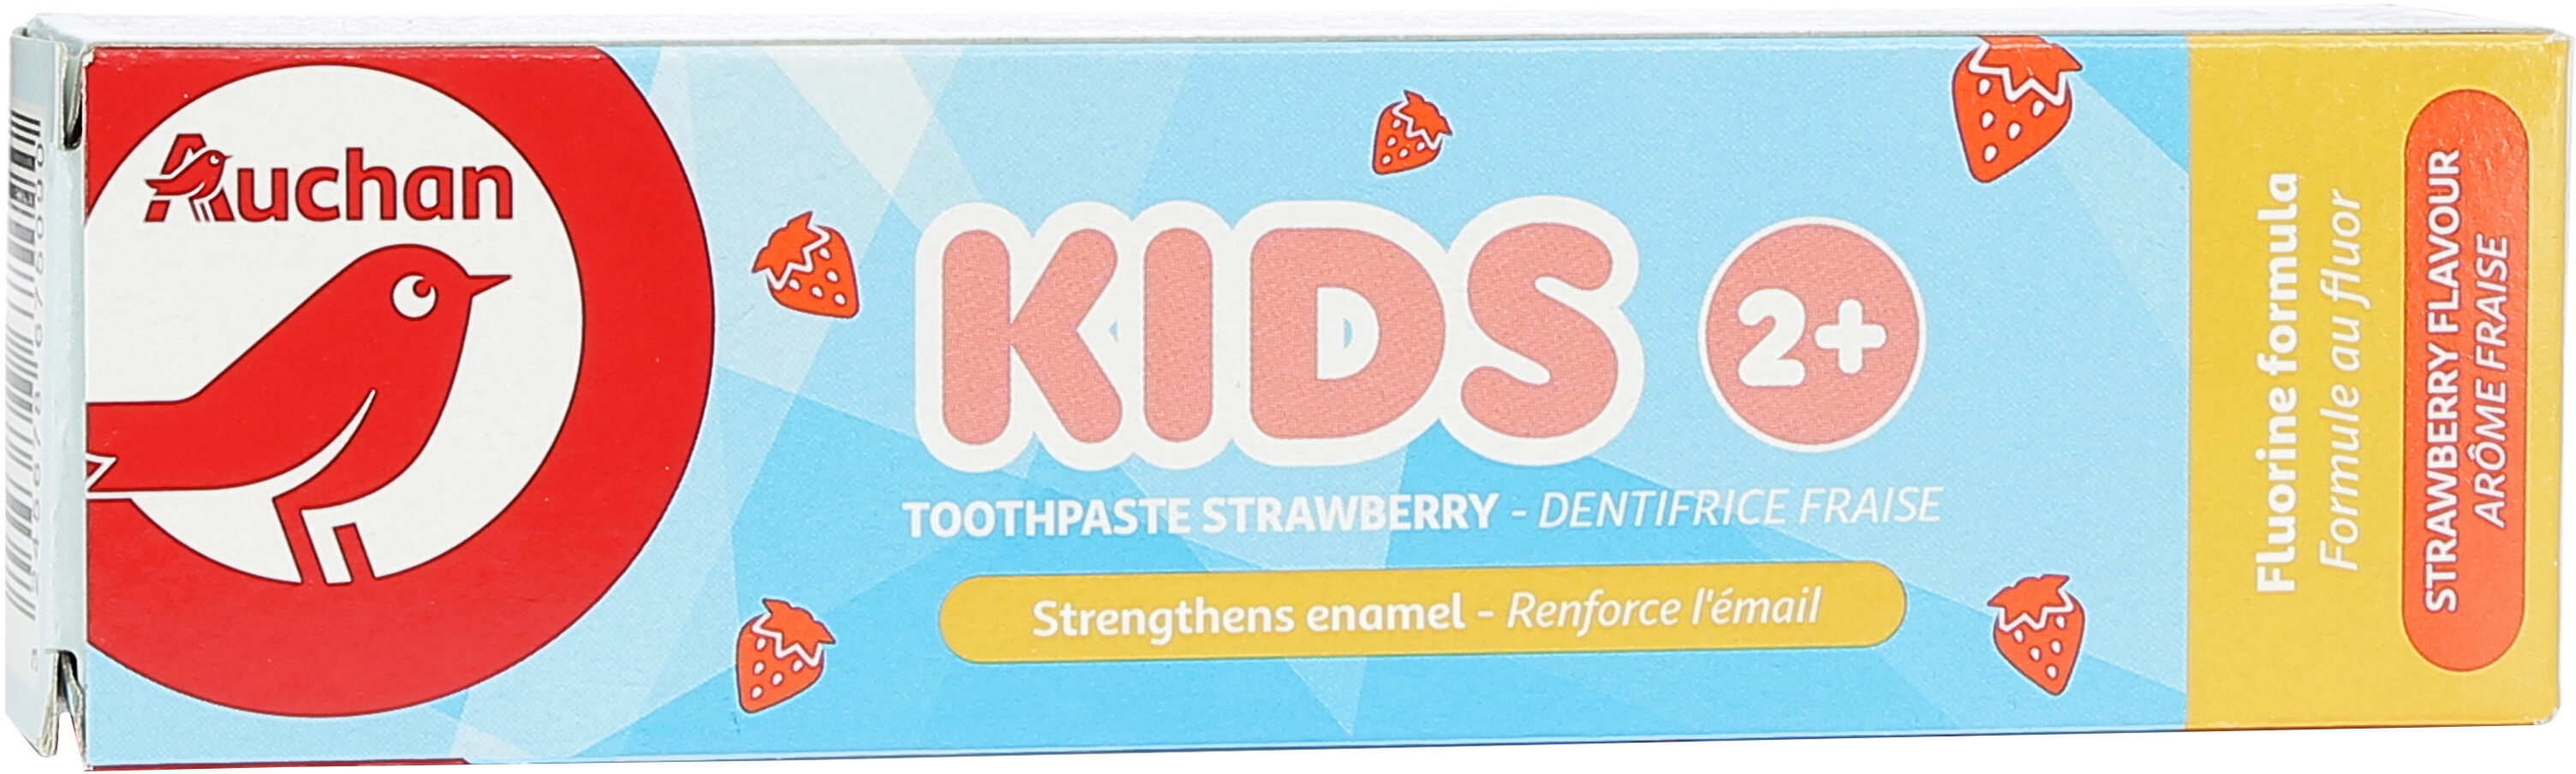 Auchan kids dentifrice - fraise - enfants 2 + - 50ml - Продукт - fr